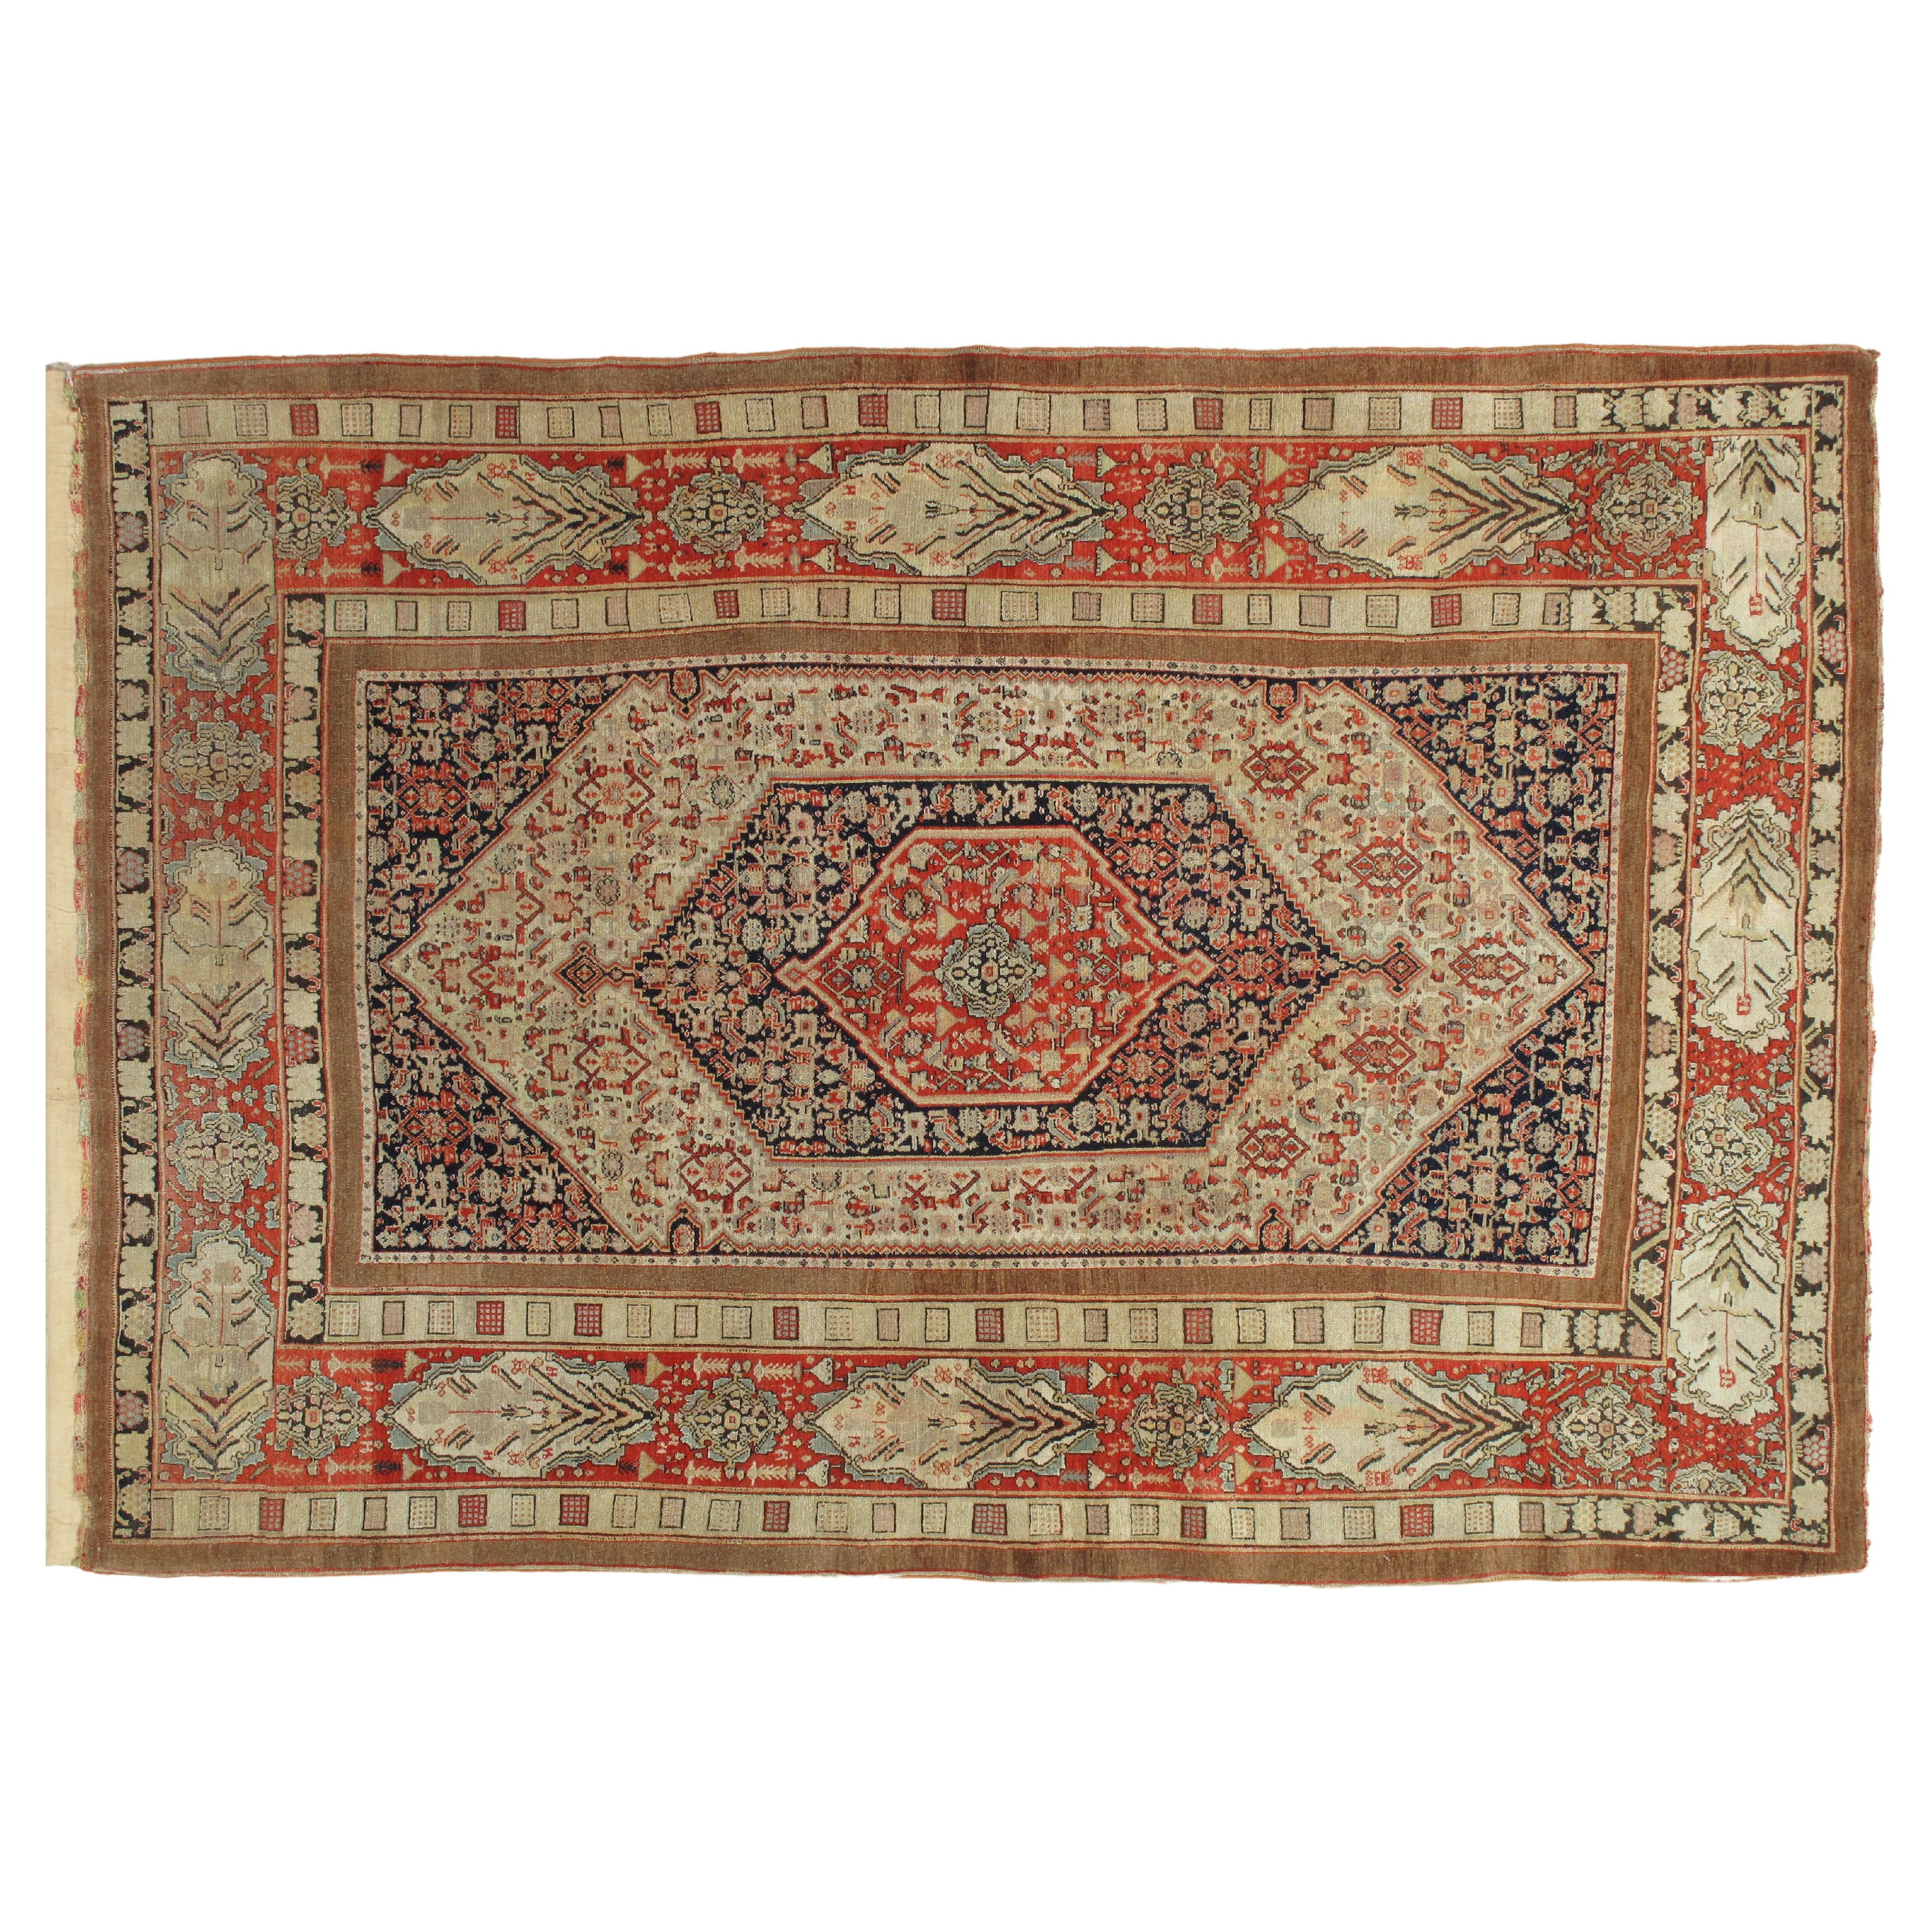 Antique Senneh Rug with Silk Warp, Handmade, Fine Ivory, Red, Brown, Ivory, Teal